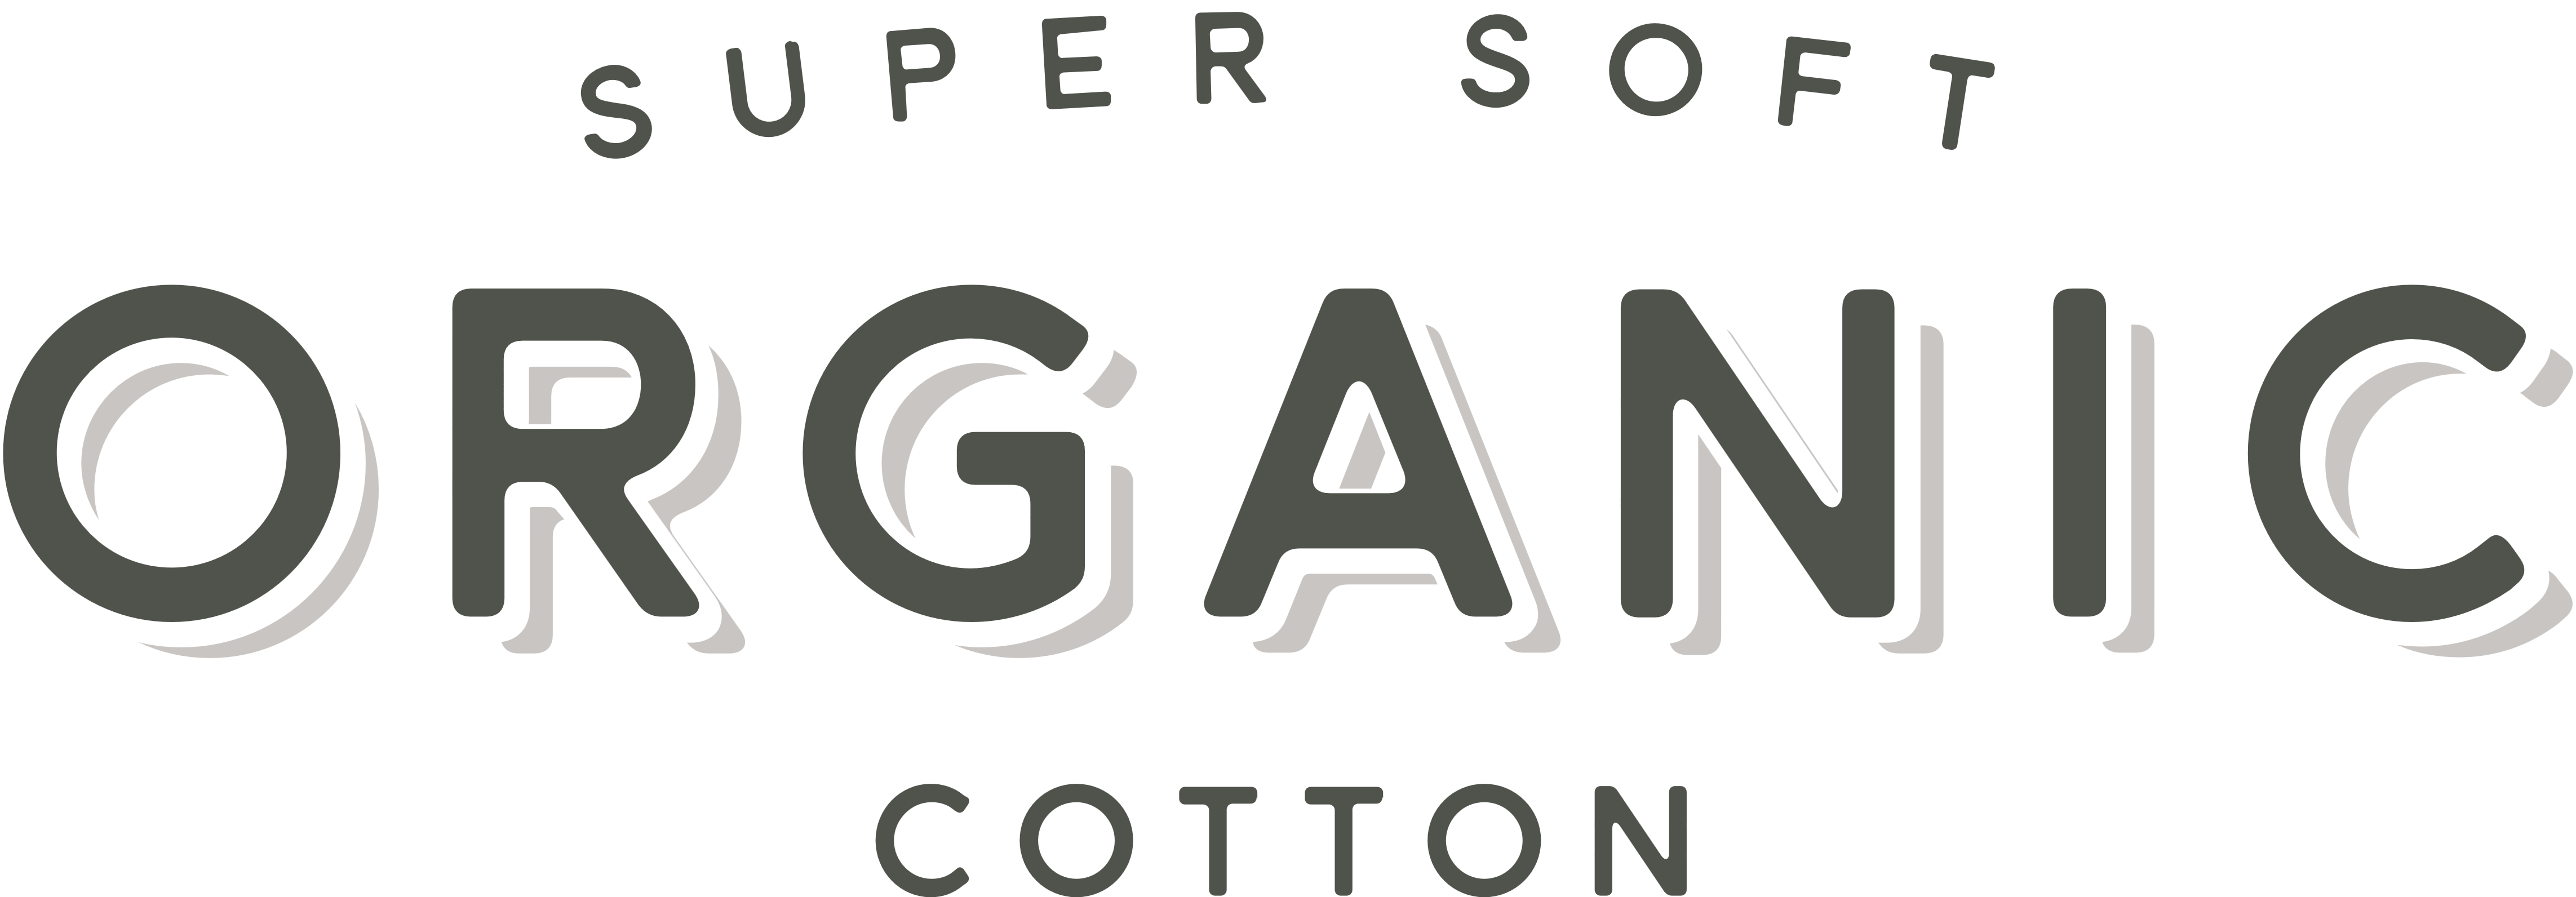 Super Soft Organic Cotton Logos Download